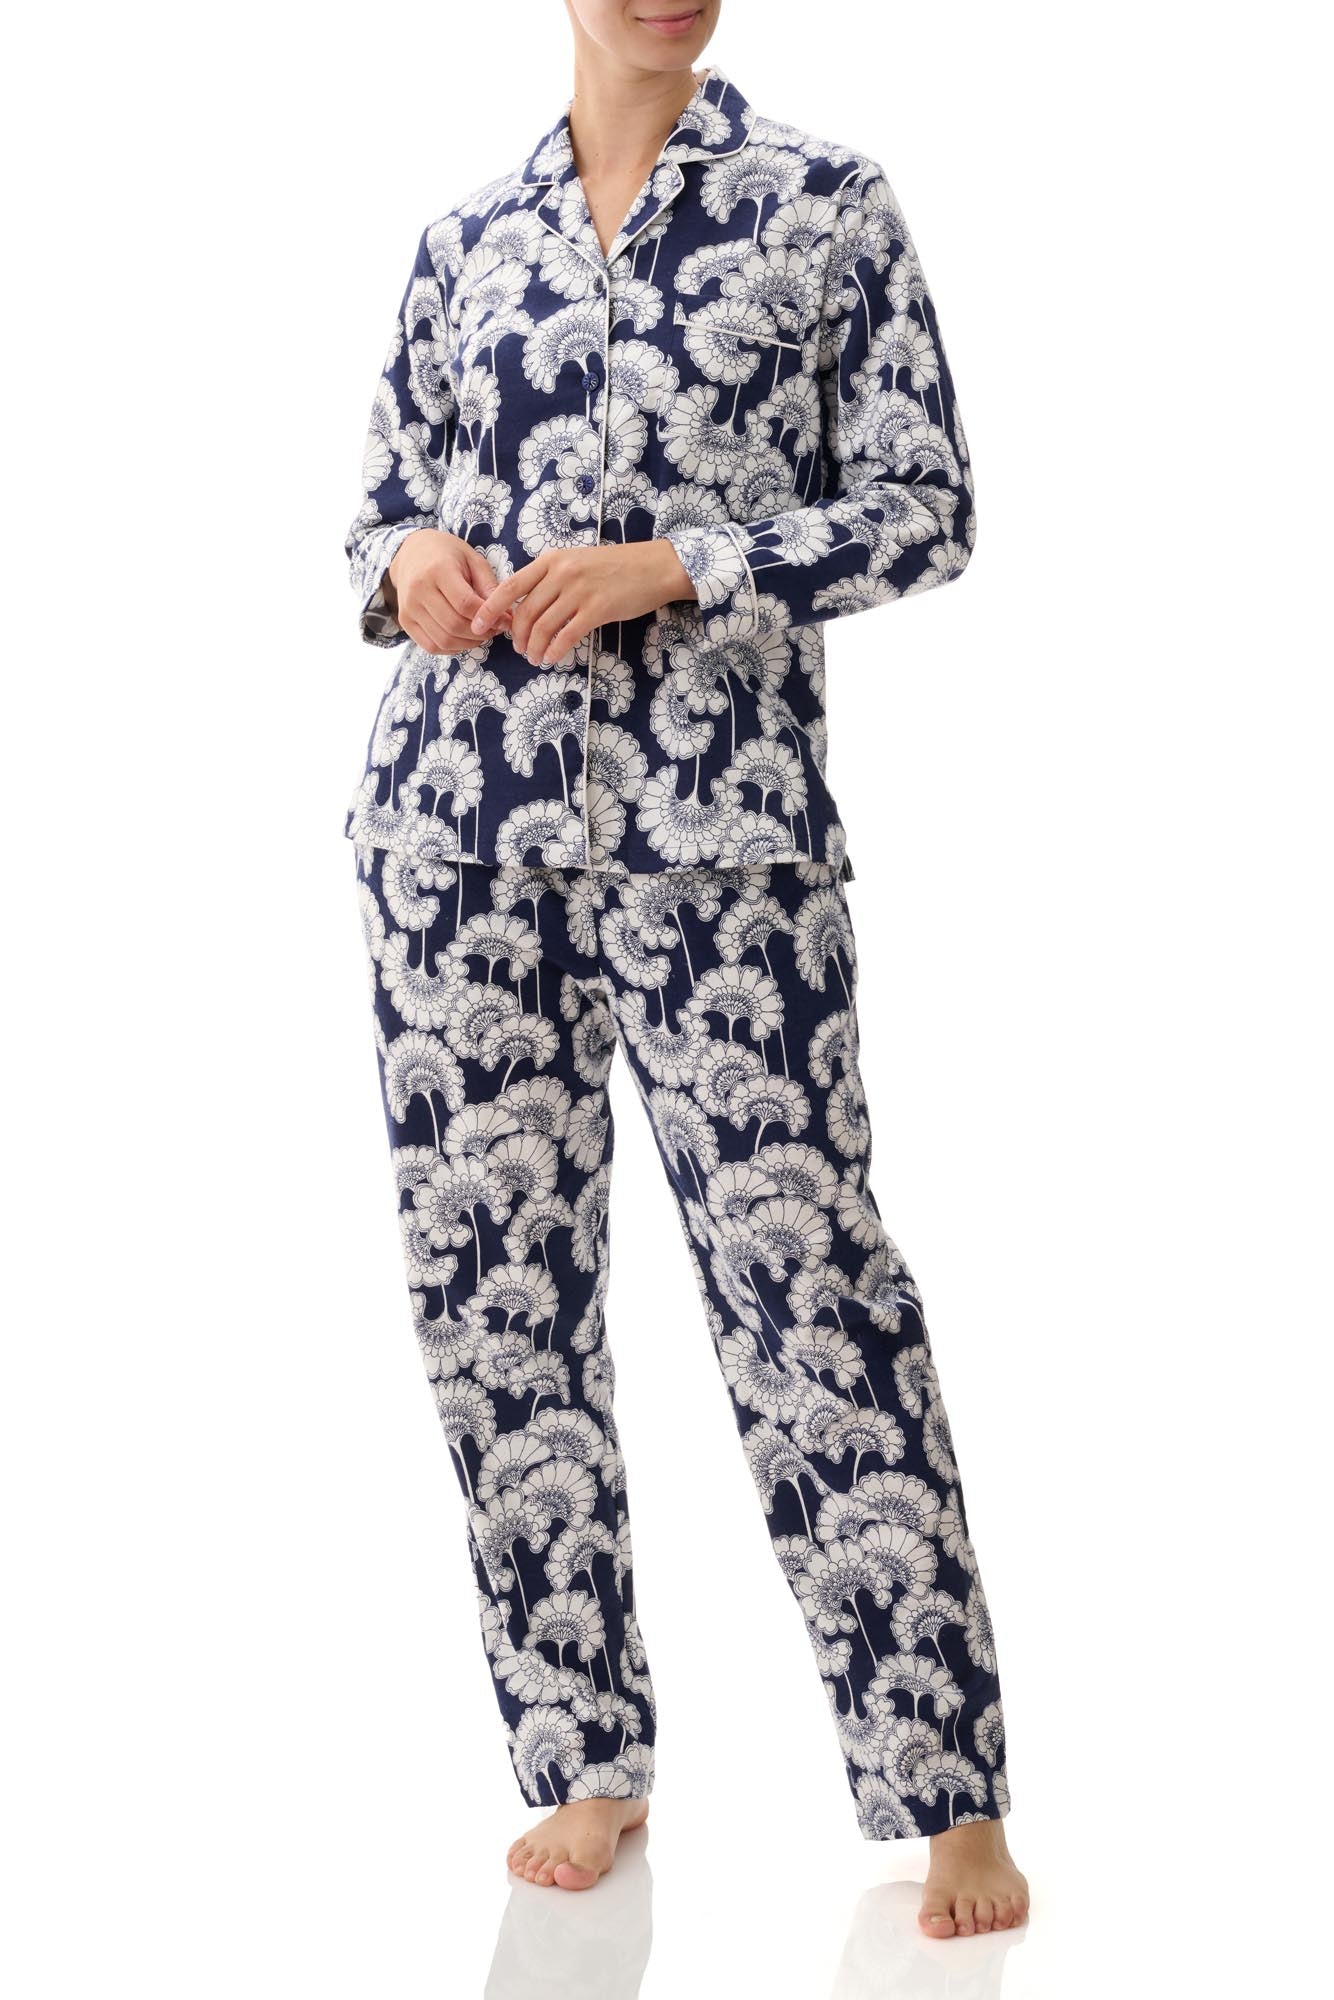 3FL96J - Long pyjama